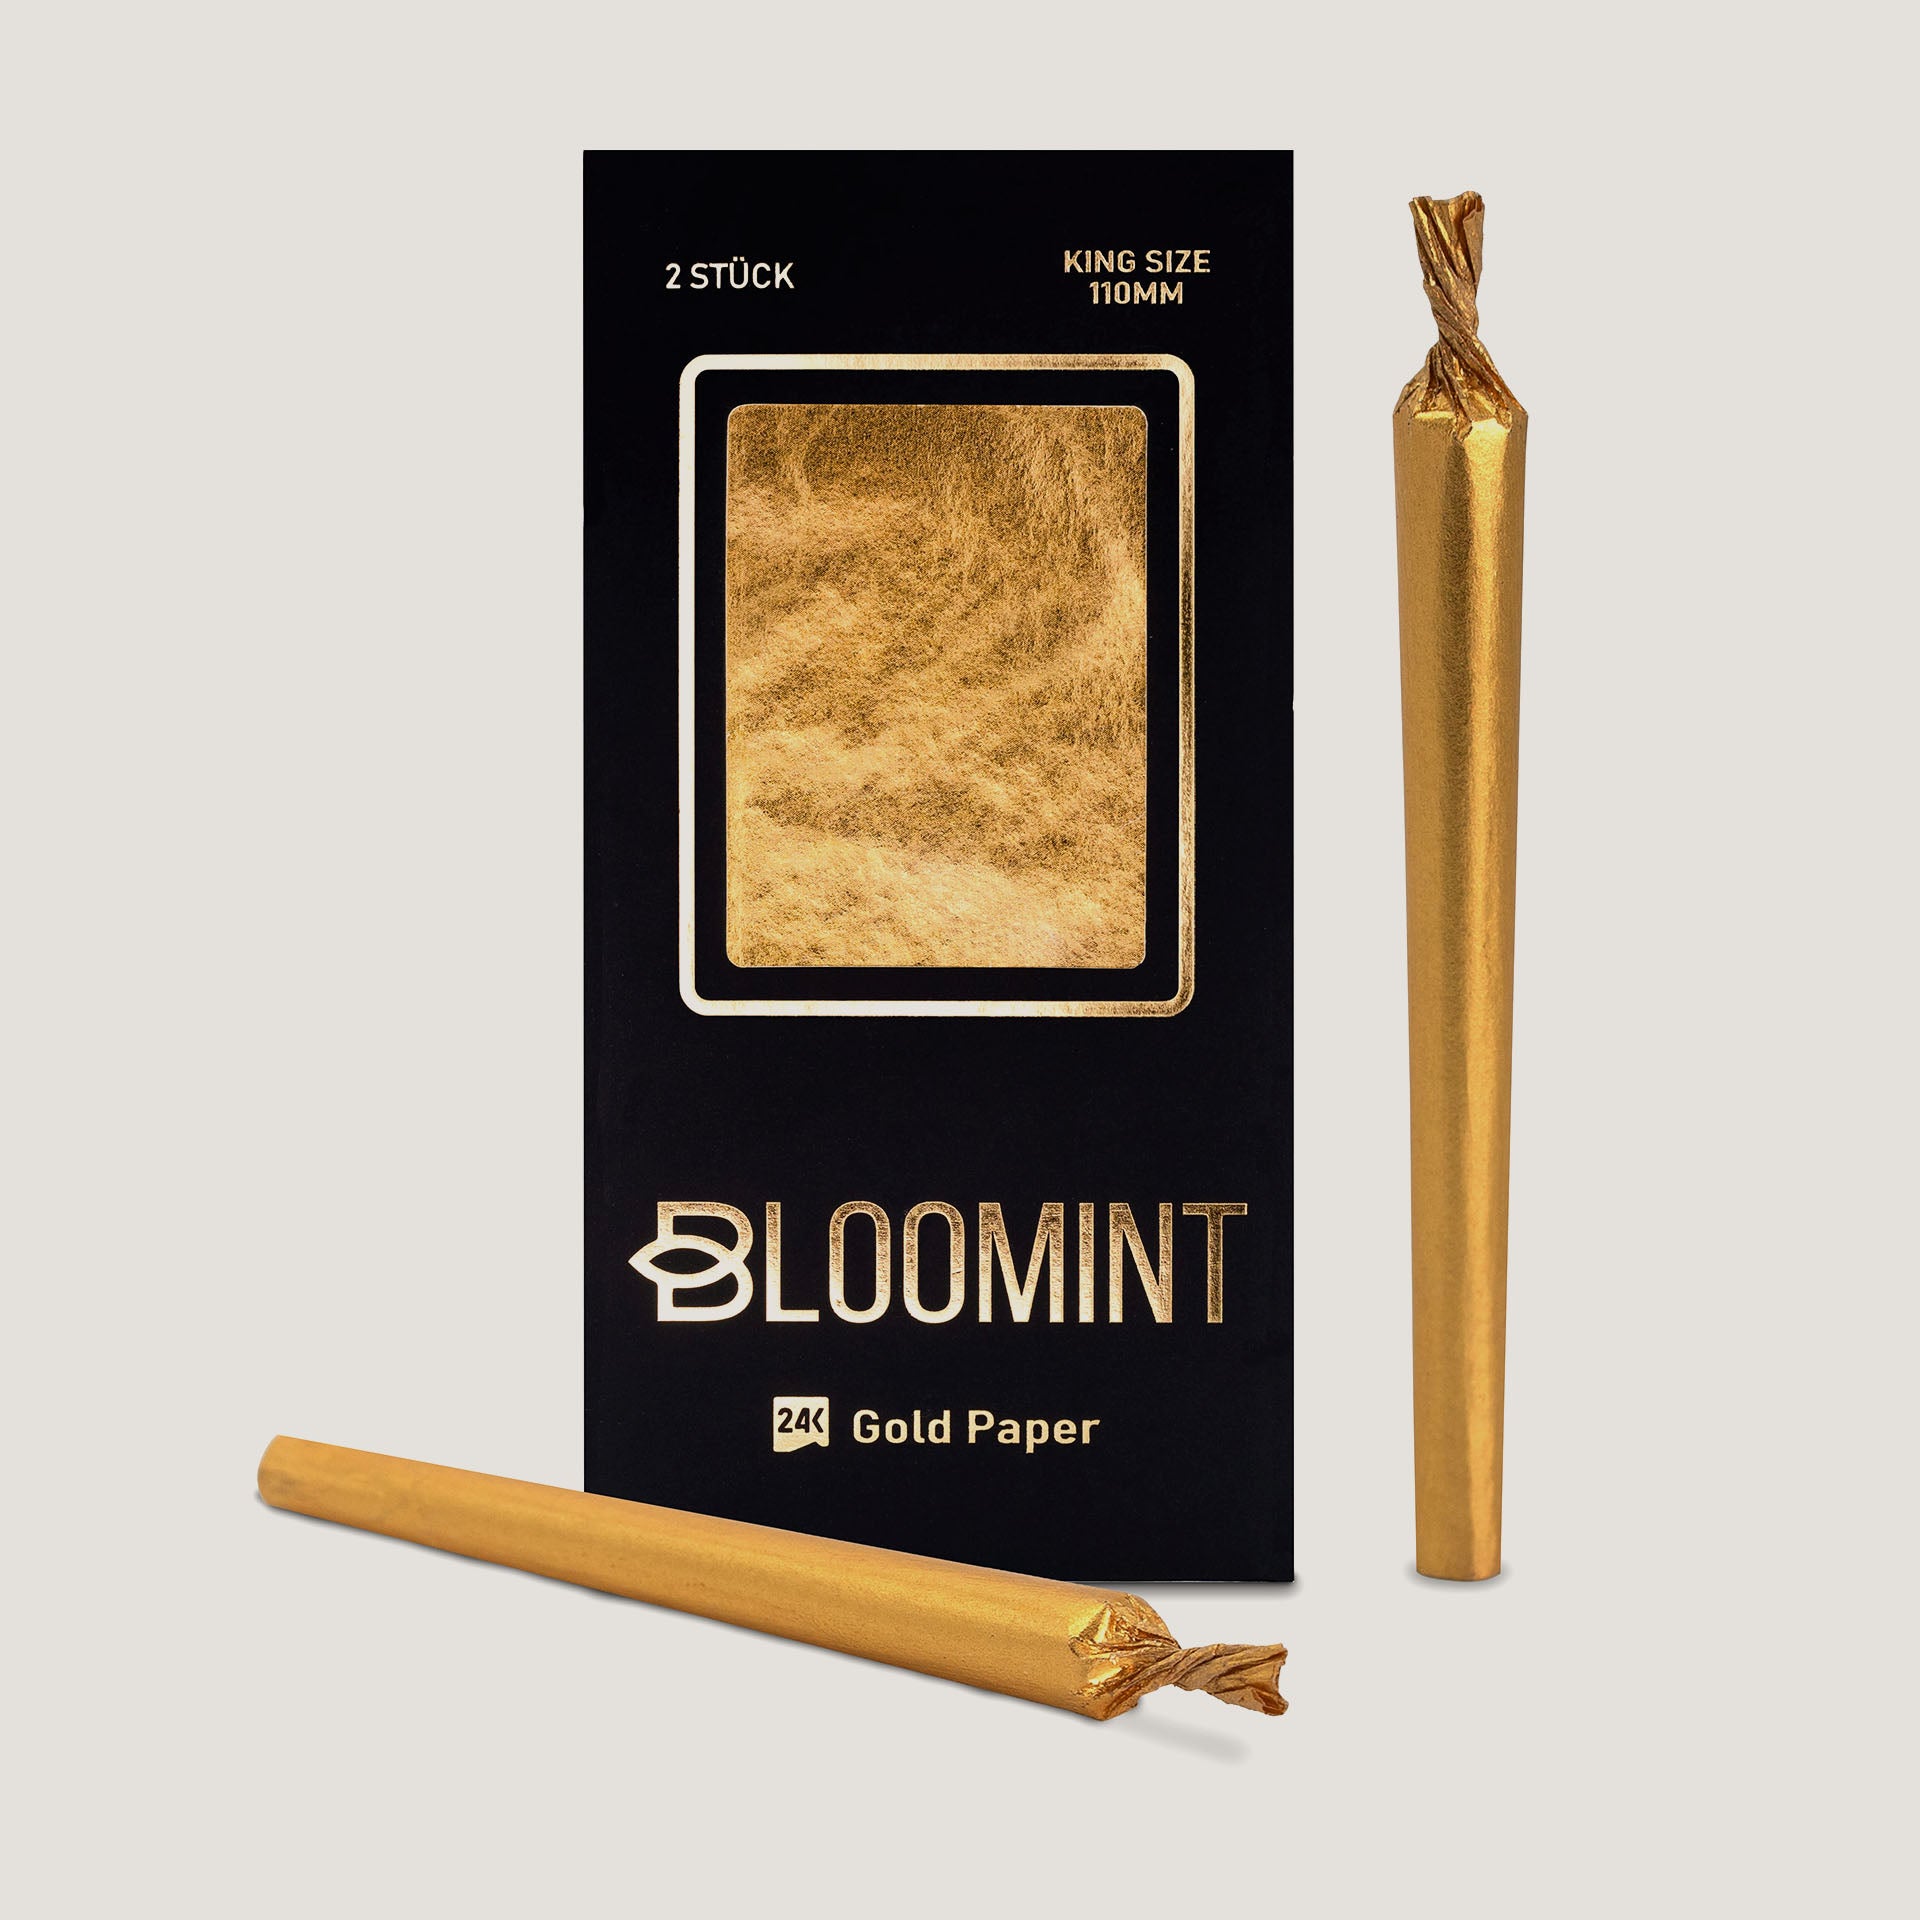 Bloomint 24 Karat Gold Papers